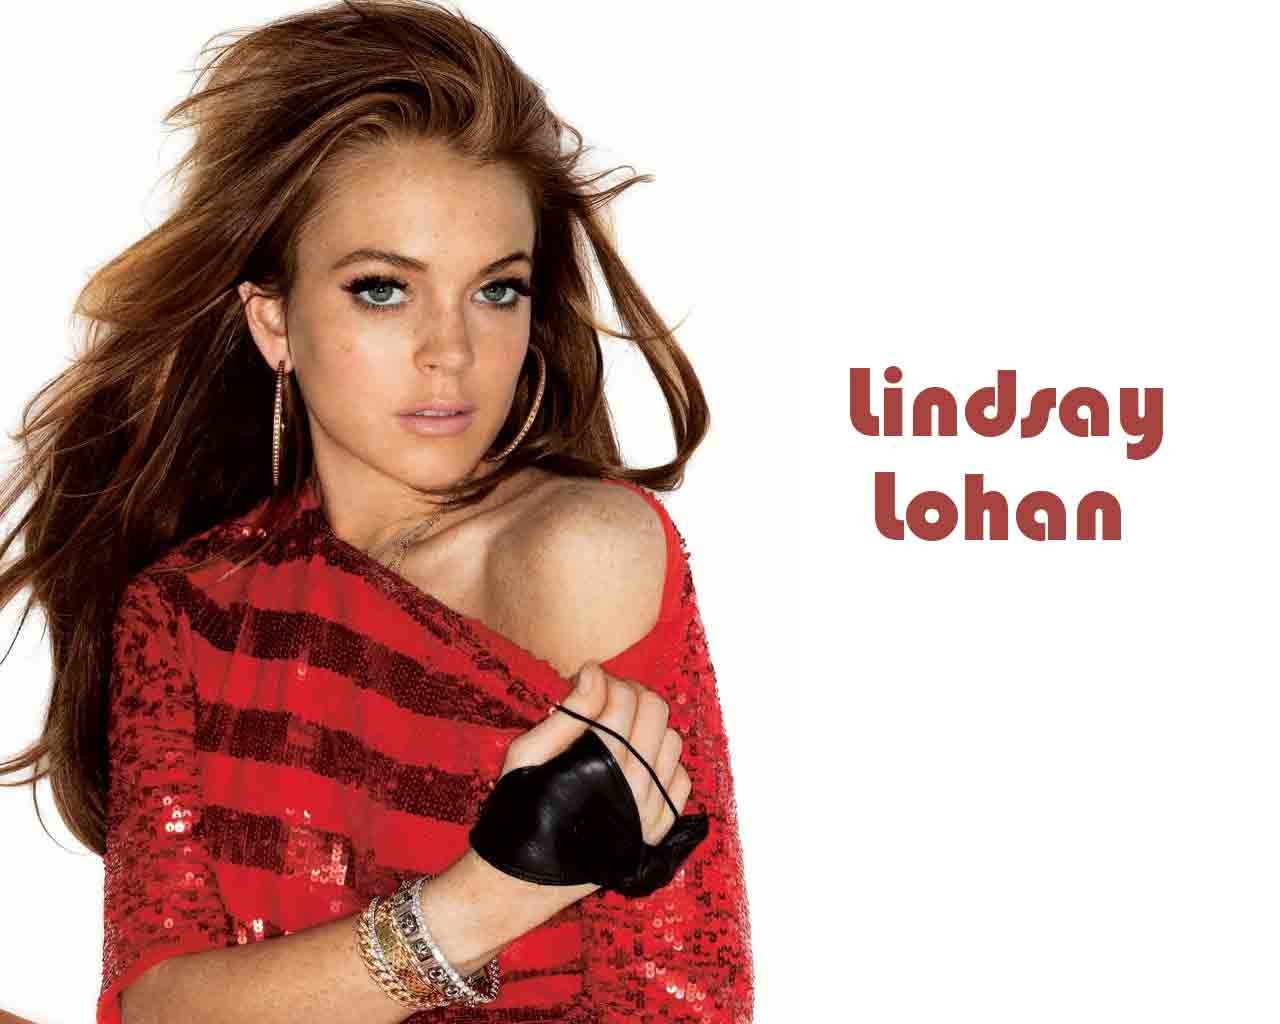 Lindsay Lohan Wallpaper Pictures Pics Image Photos Desktop